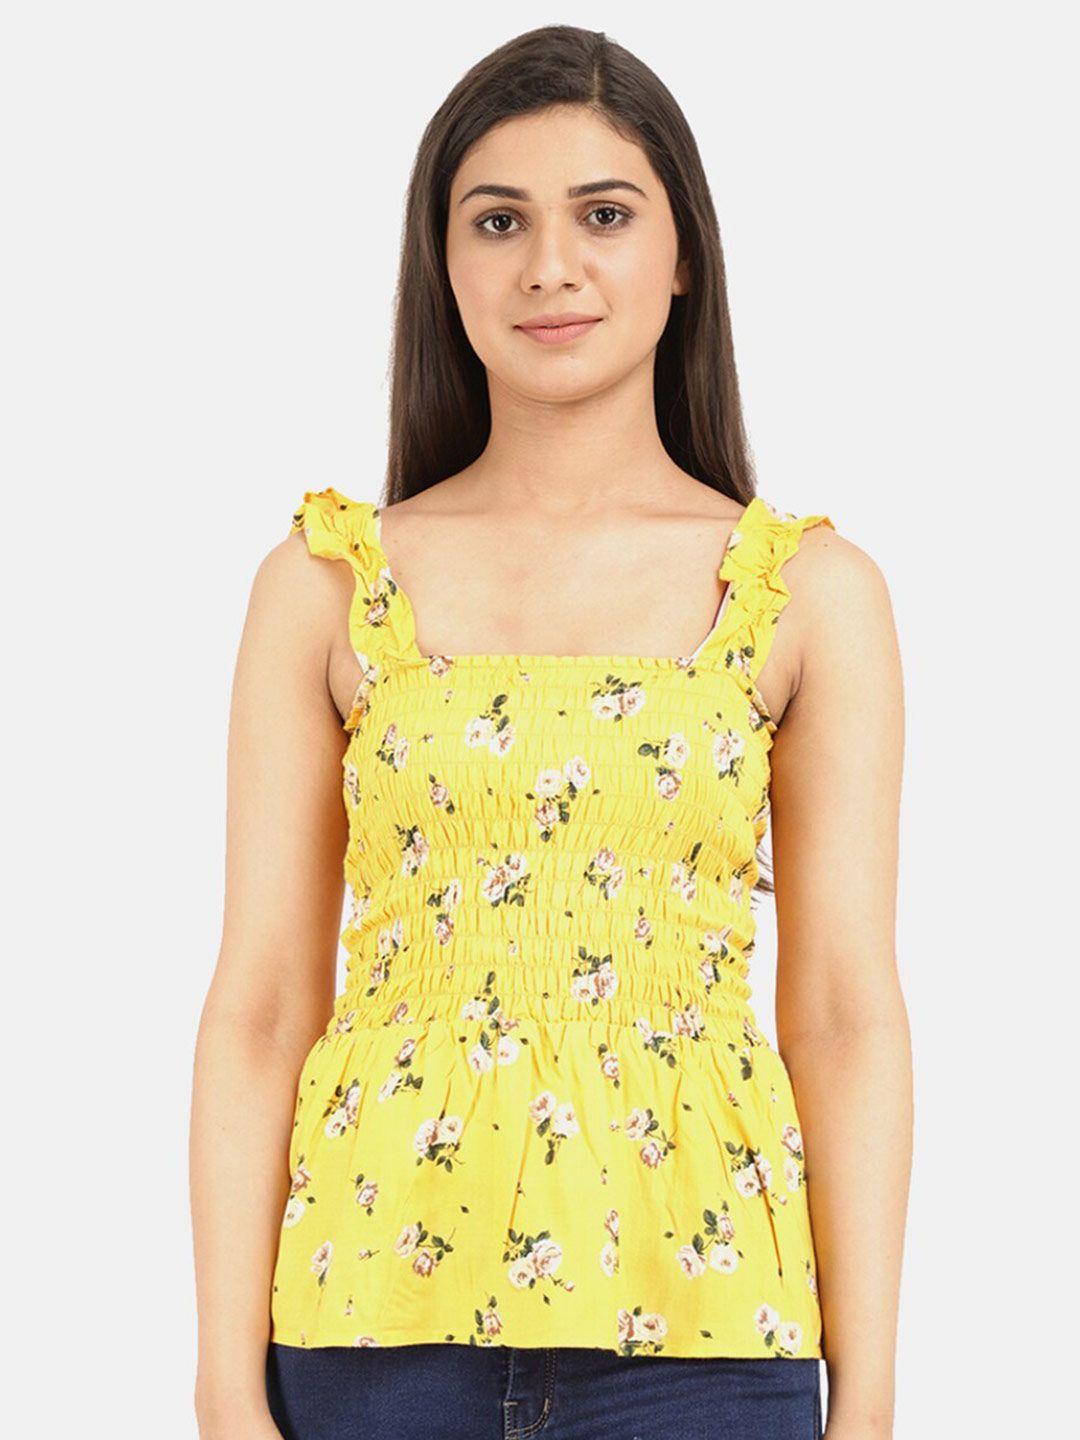 v-mart-women-western-mustard-yellow-floral-printed-shoulder-strap-top